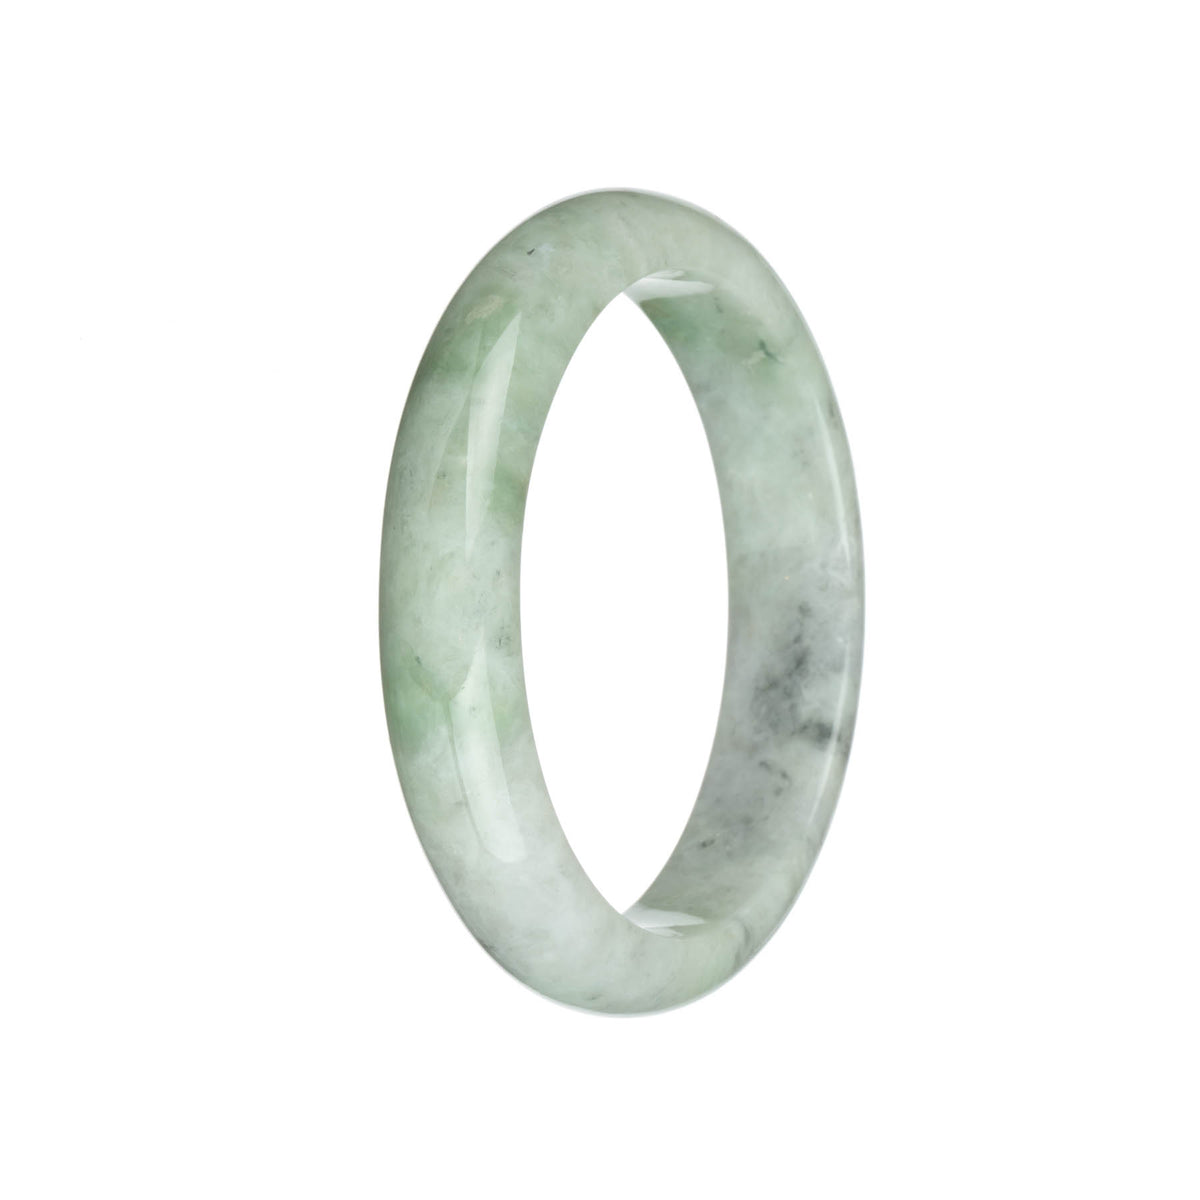 Genuine Grade A Light Grey and Green with Grey Spots Jadeite Jade Bracelet - 63mm Half Moon